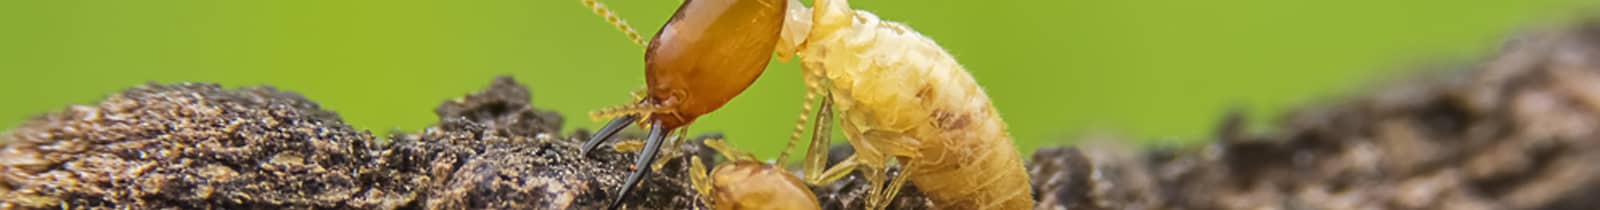 Termite Exterminator treatment pest control Nashville, TN